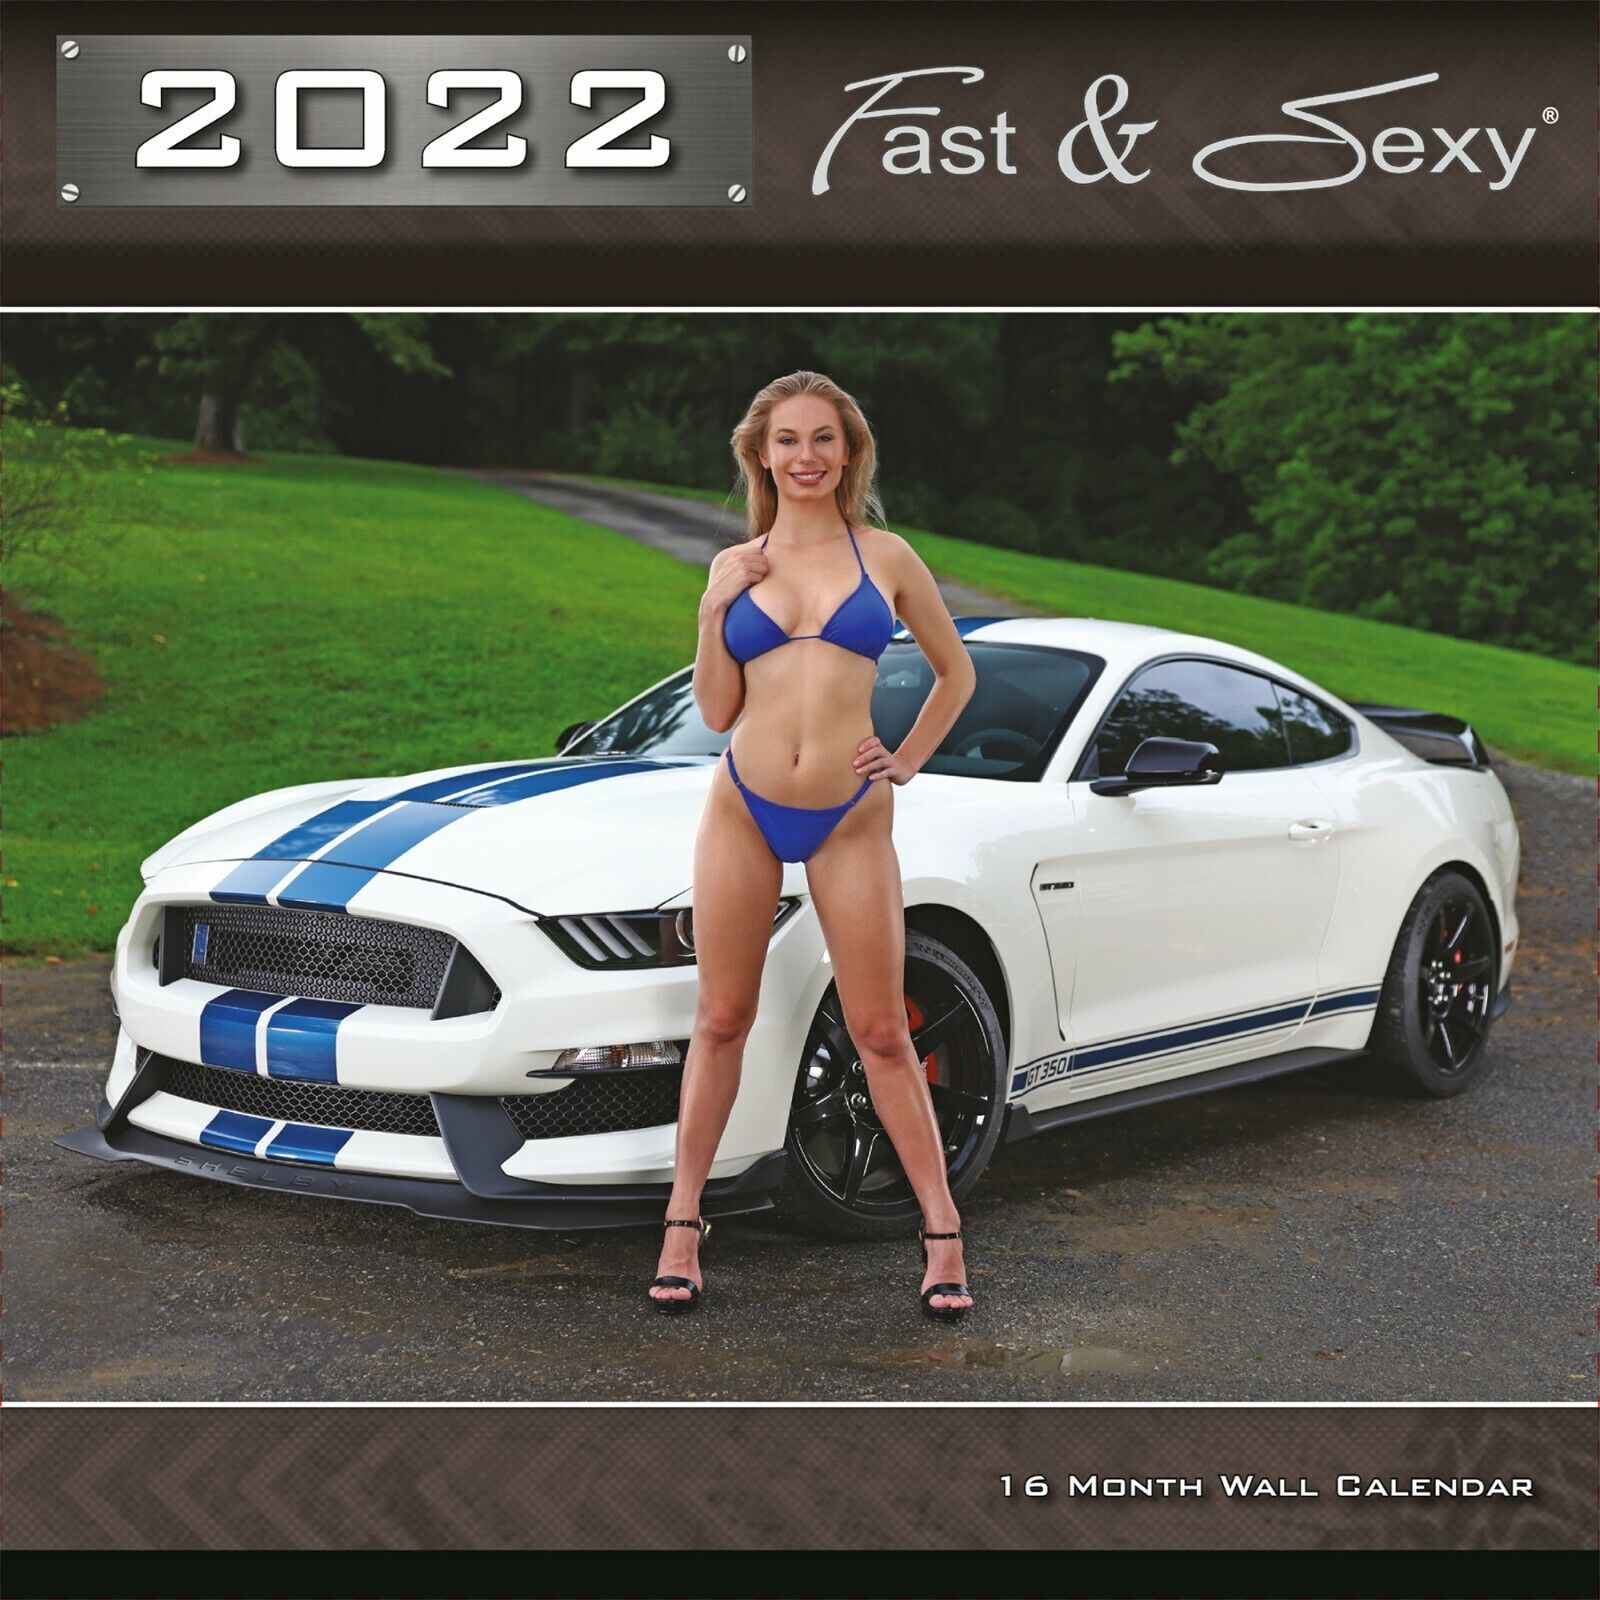 2022 Fast & Sexy Car Girl Wall Calendar 12x12 inches (PG Version)